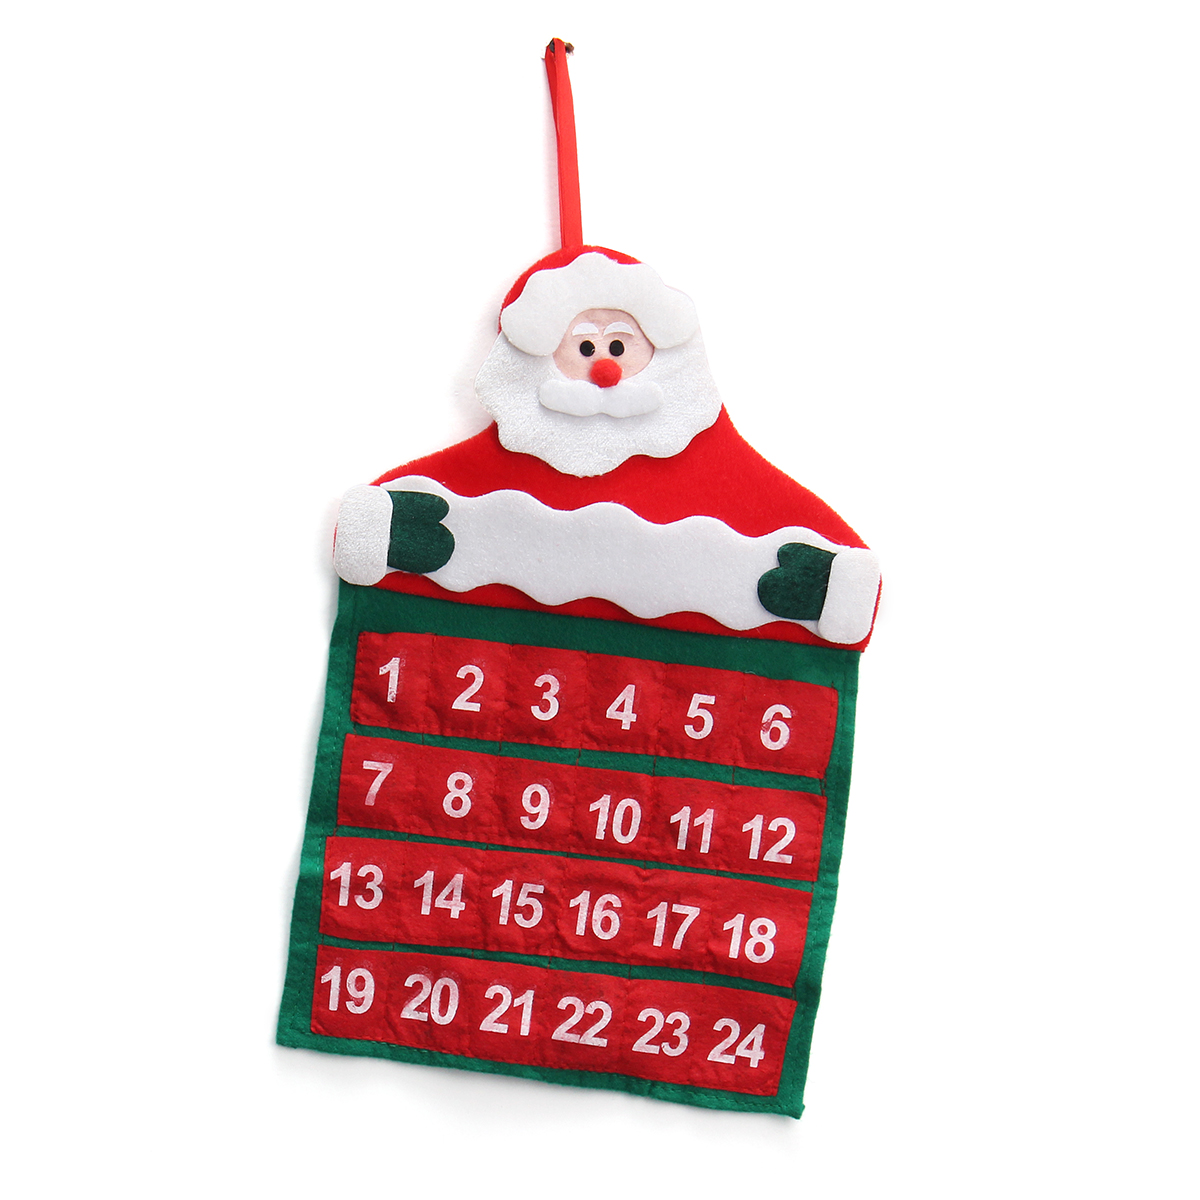 Felt-Christmas-Advent-Wall-Hanging-Calendar-Pockets-Santa-Reindeer-Snowman-Decorations-1462546-1